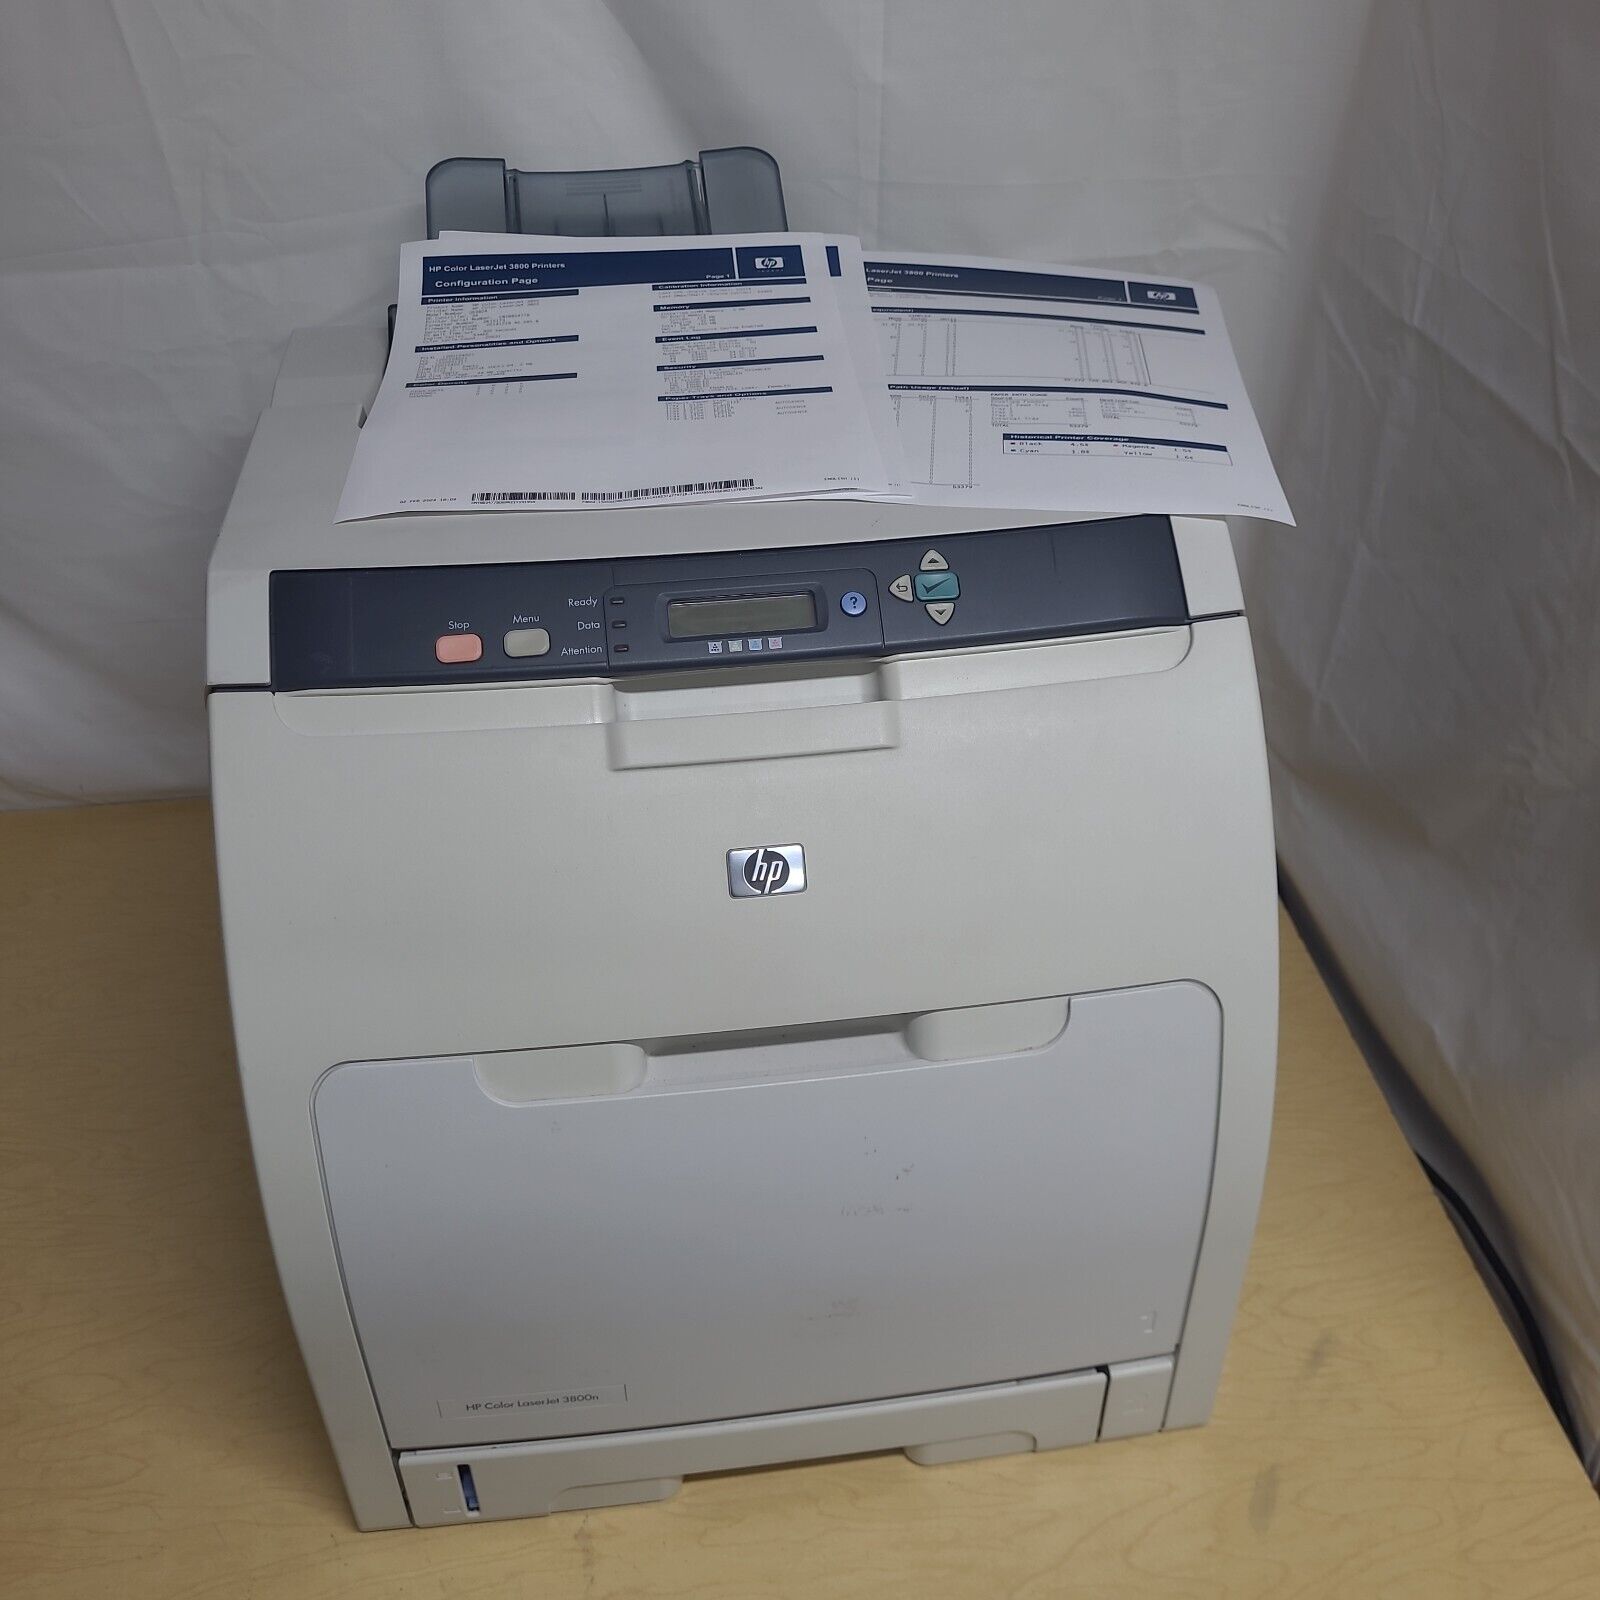 HP Color LaserJet 3800N Printer Networkable with Toner Working Great